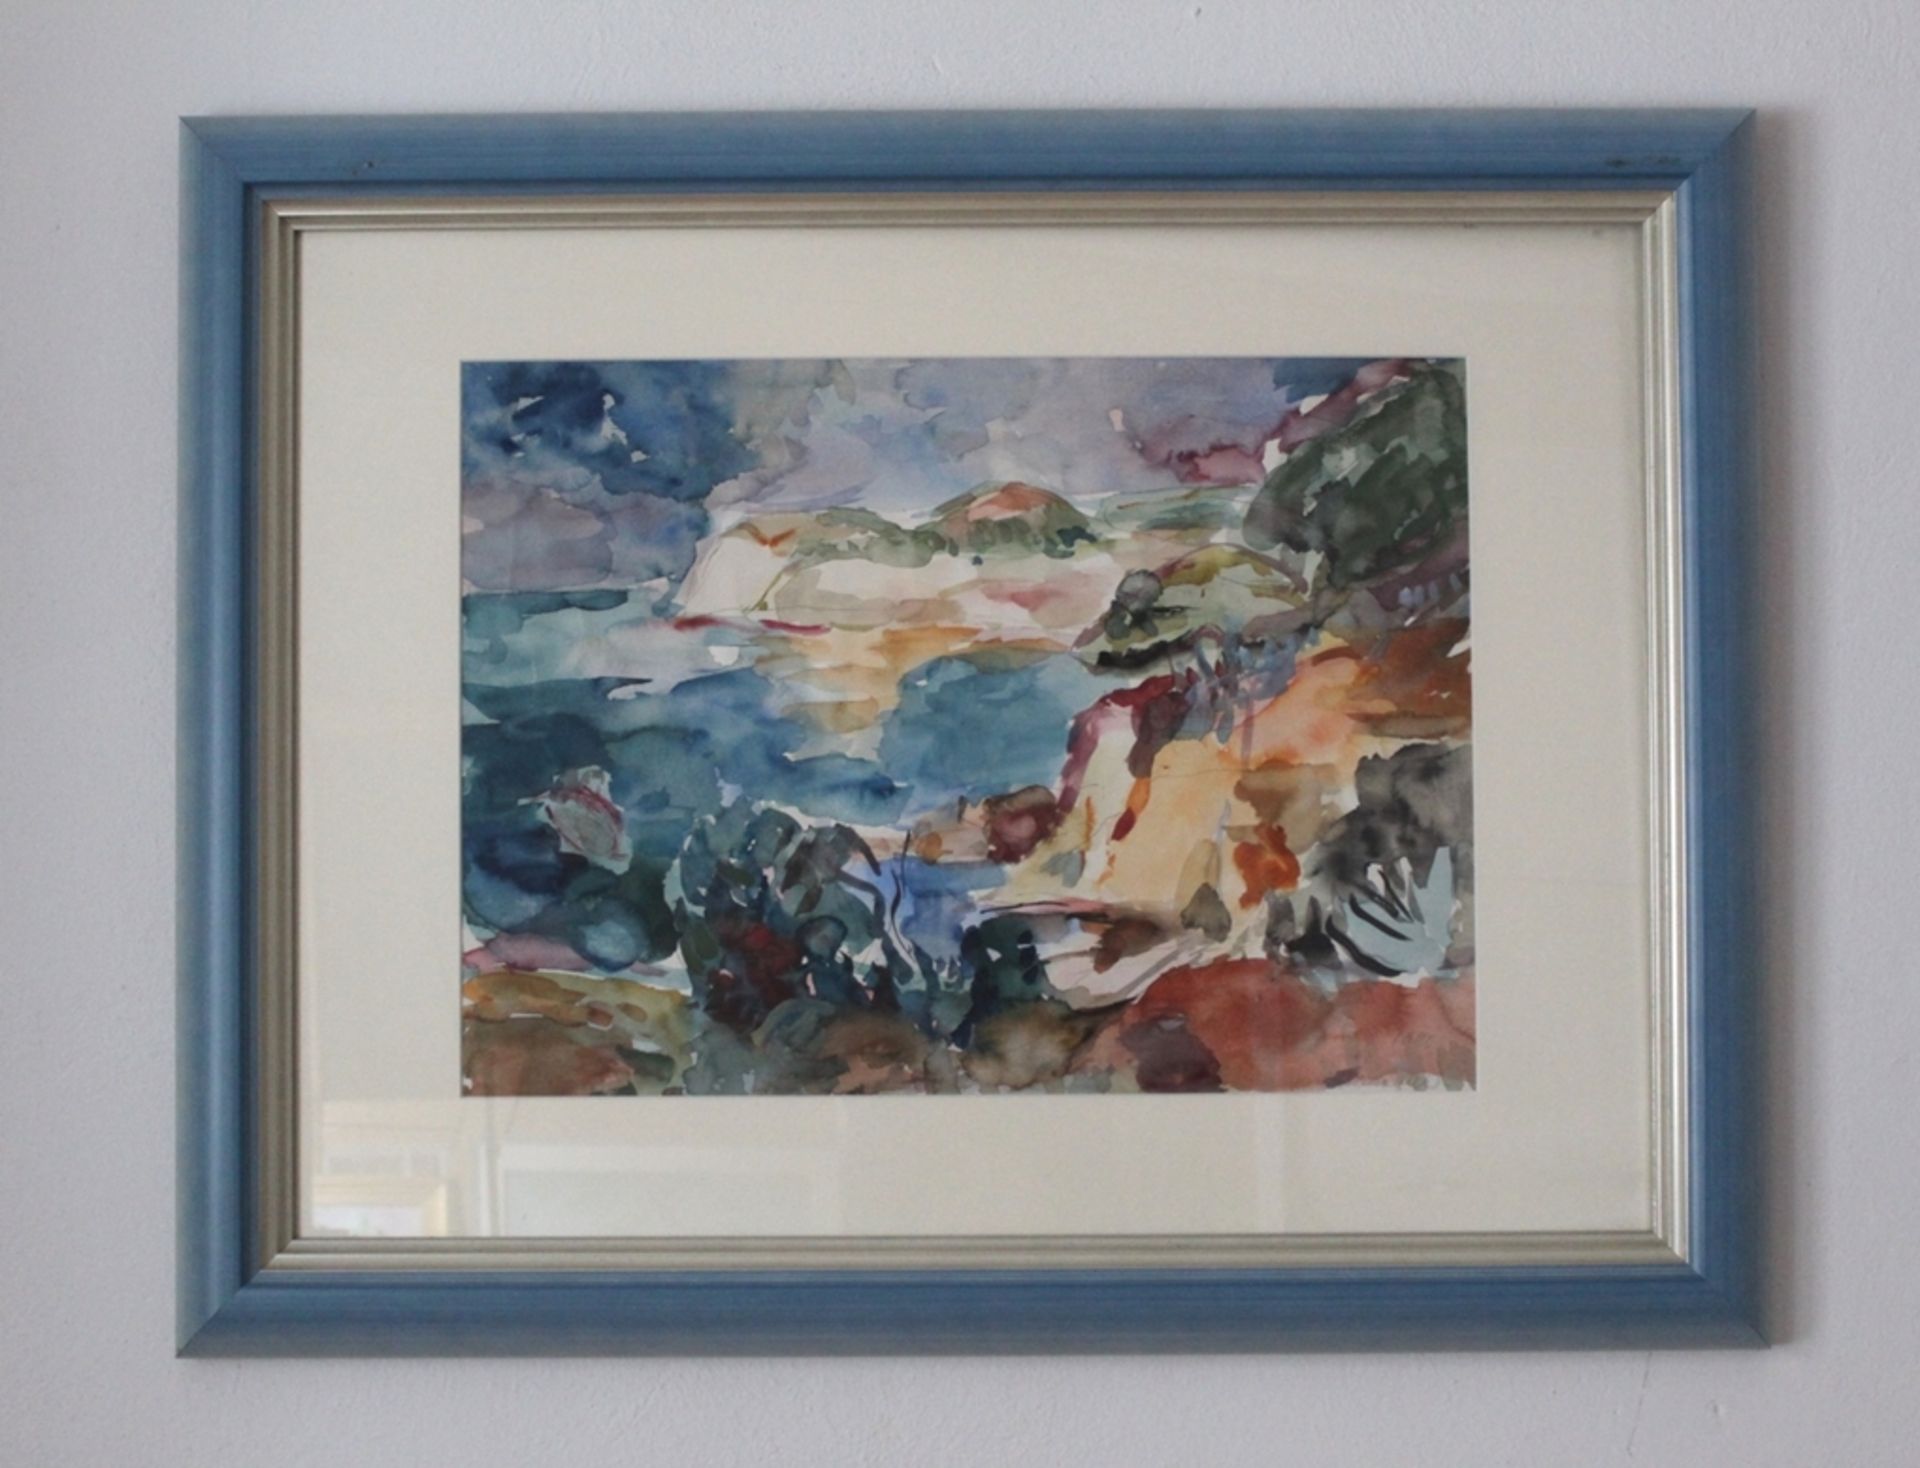 Aquarell "Landschaft", Künstler: Manfred Henninger, 1894-1986, Gerahmt unter Glas, Maß mit Rahmen c